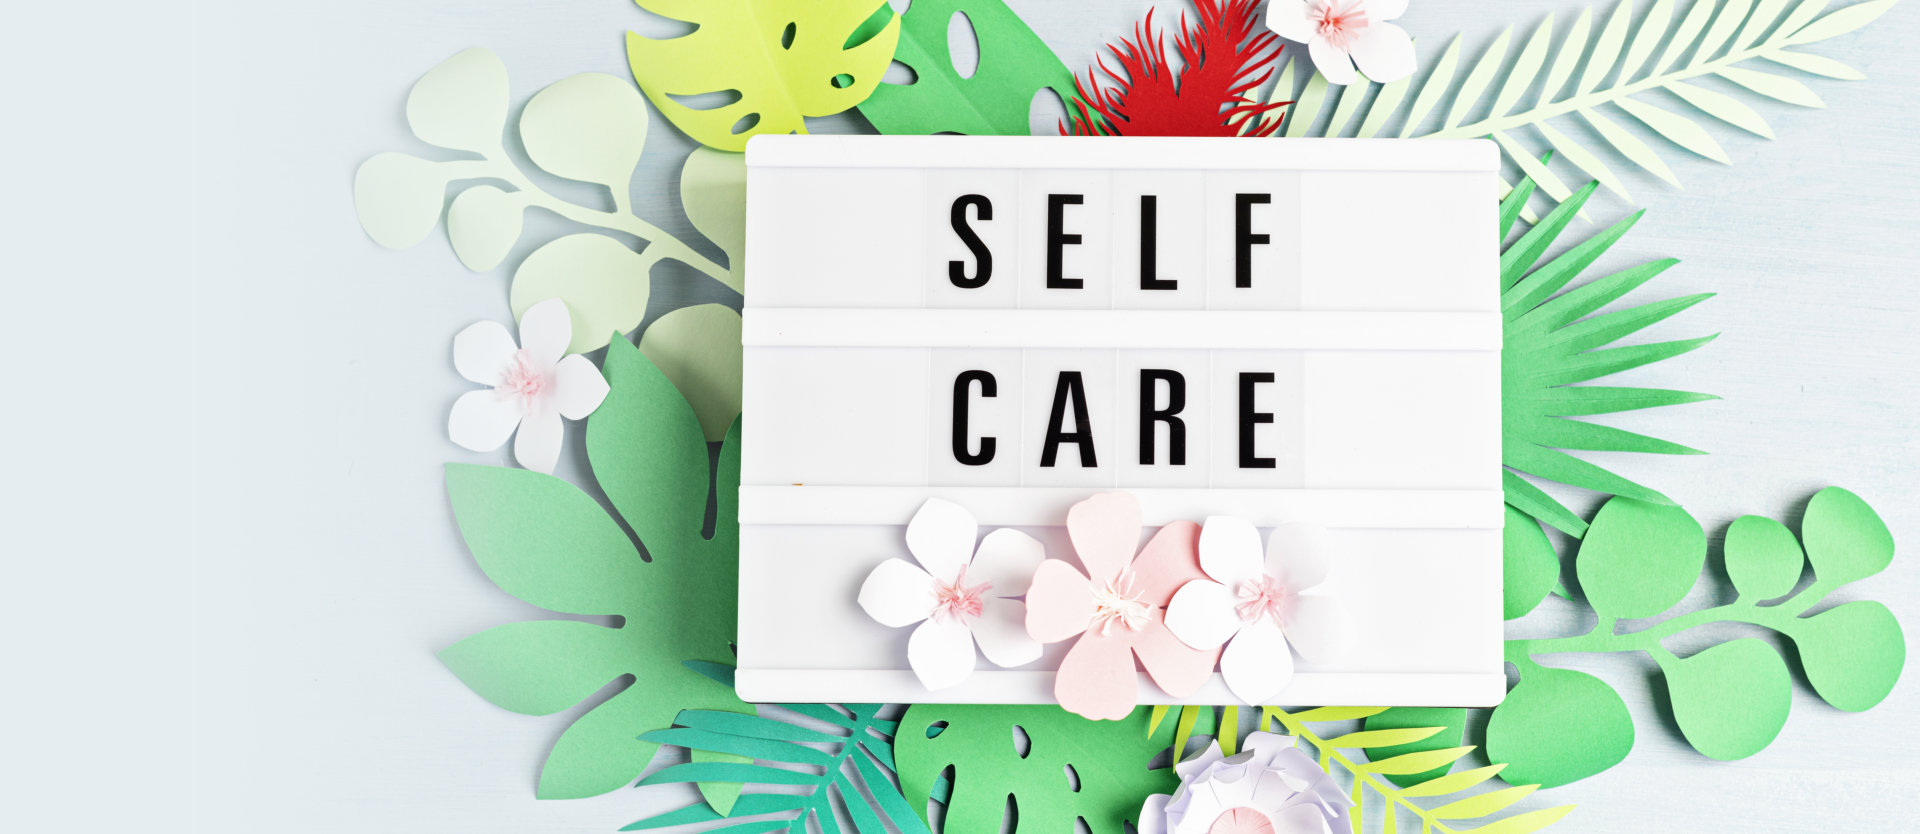 self care slogan